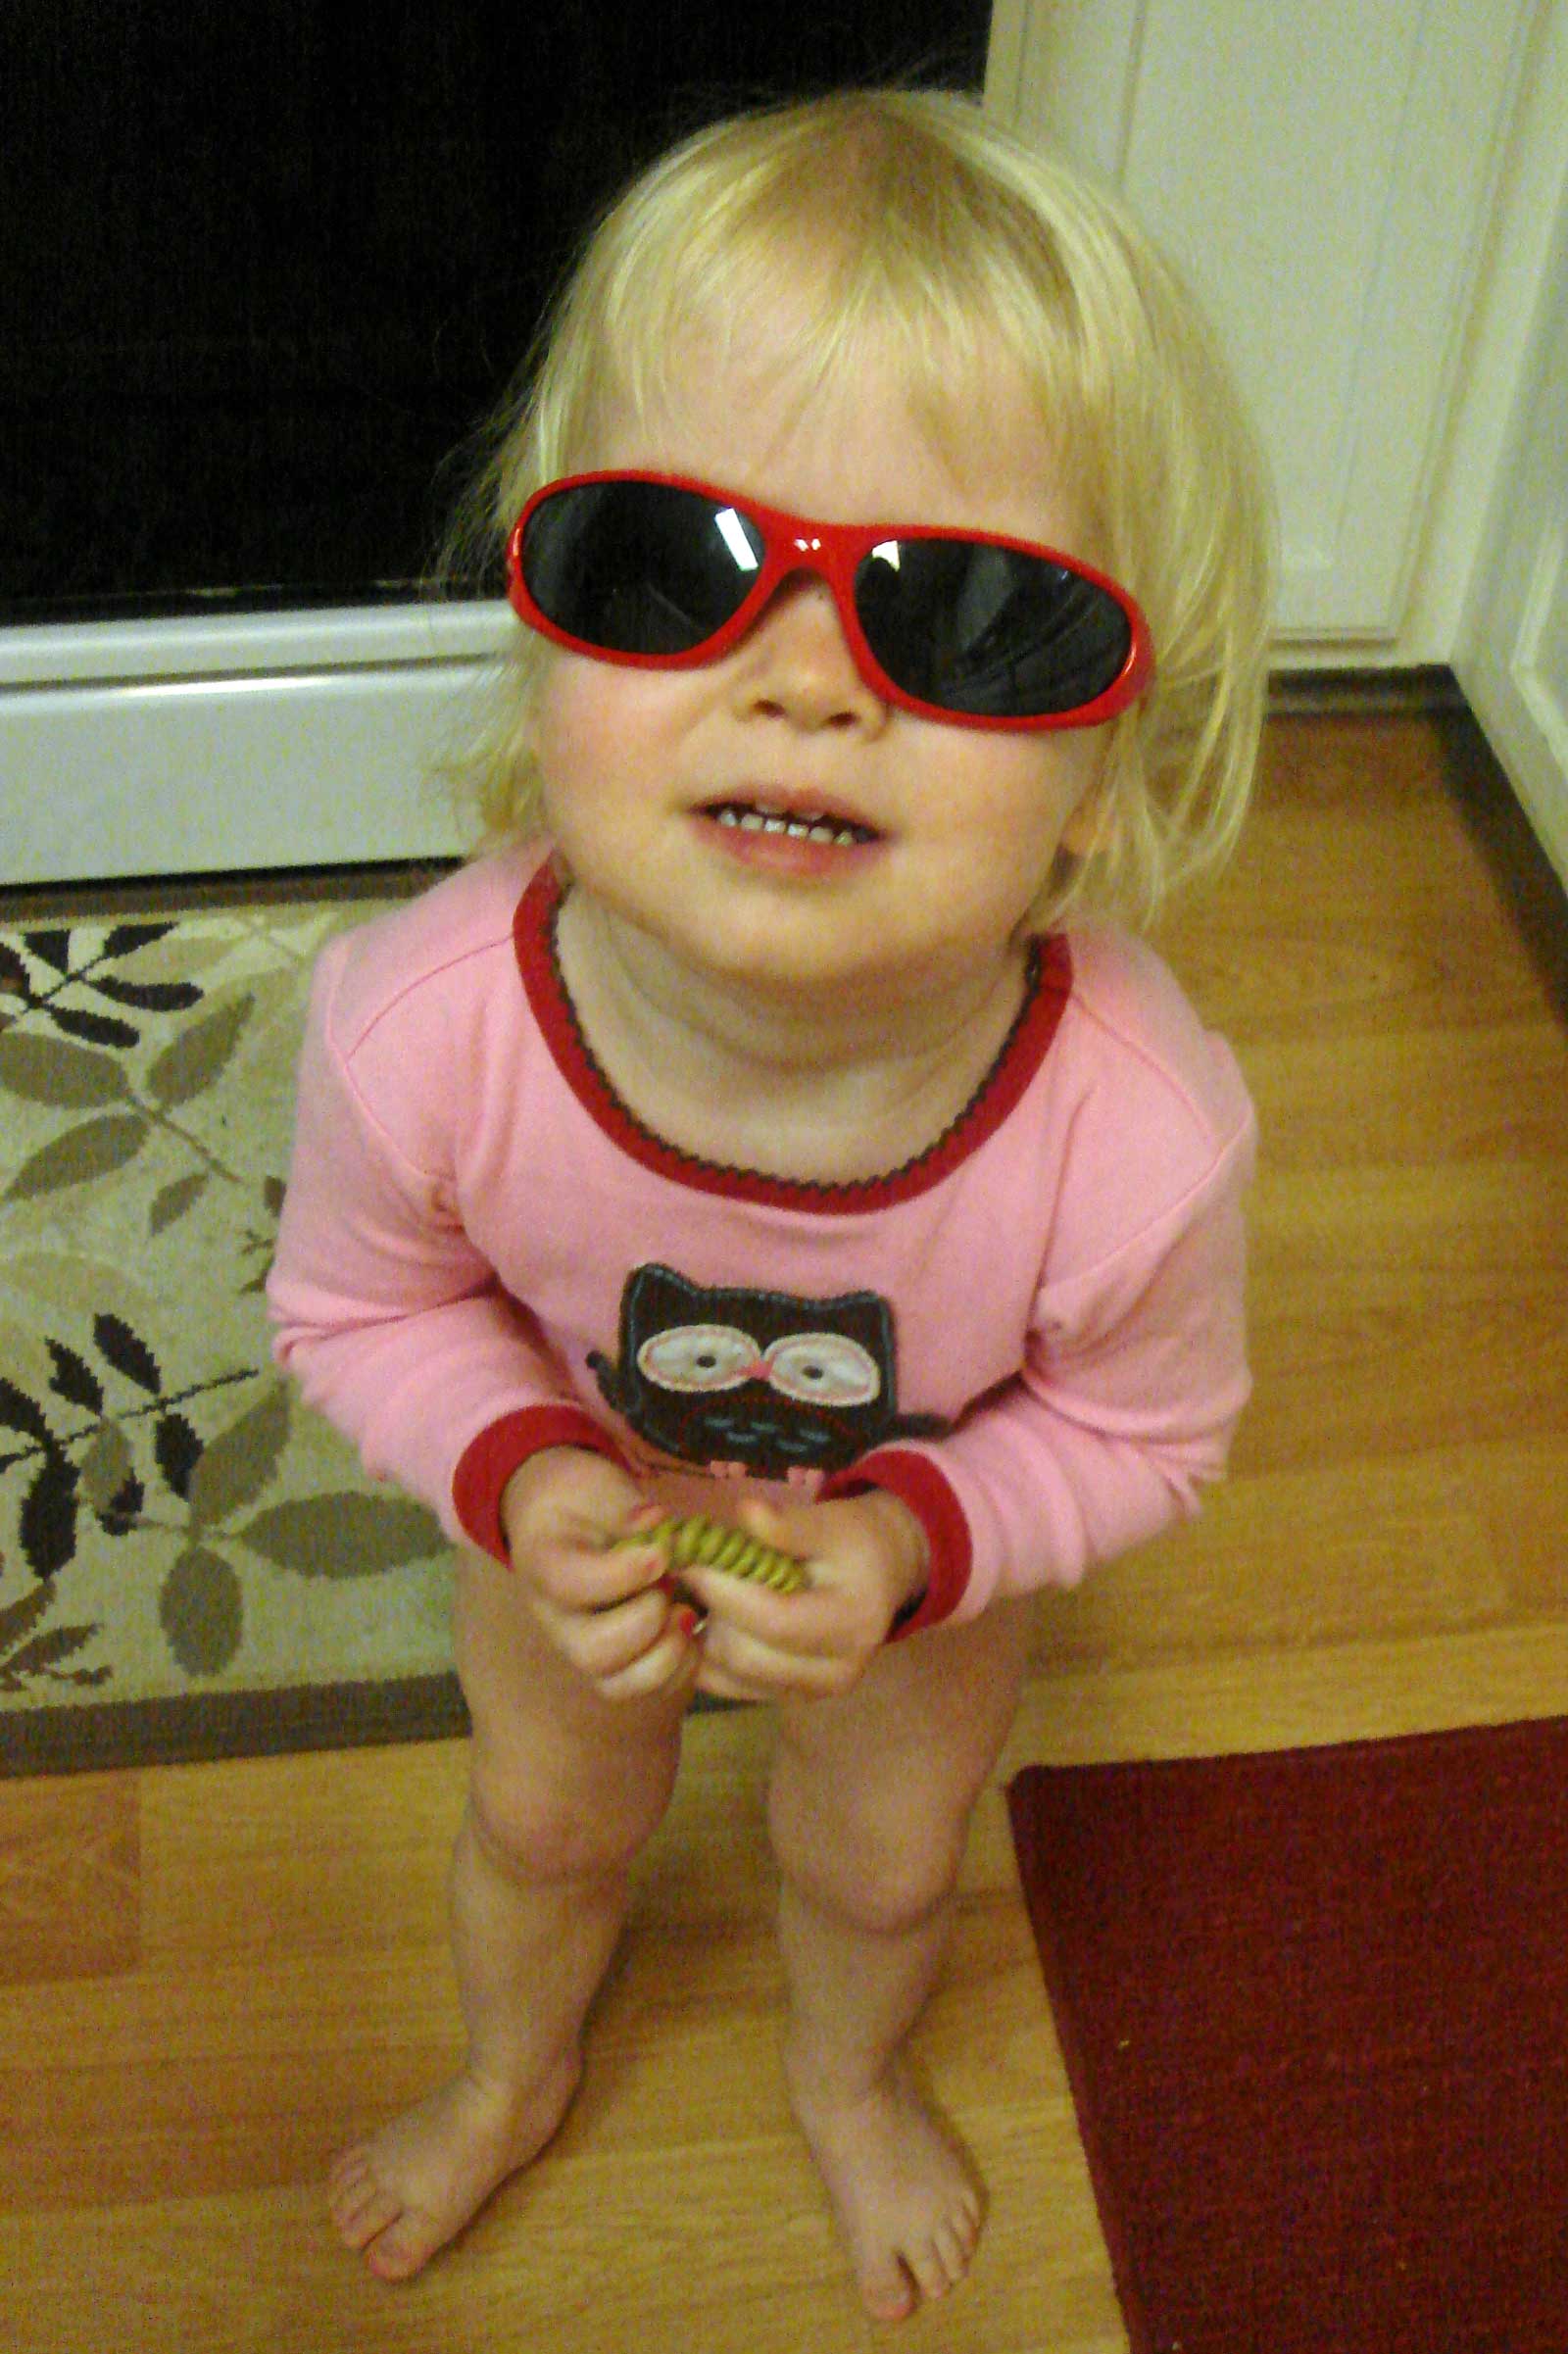 Emily wearing sunglasses